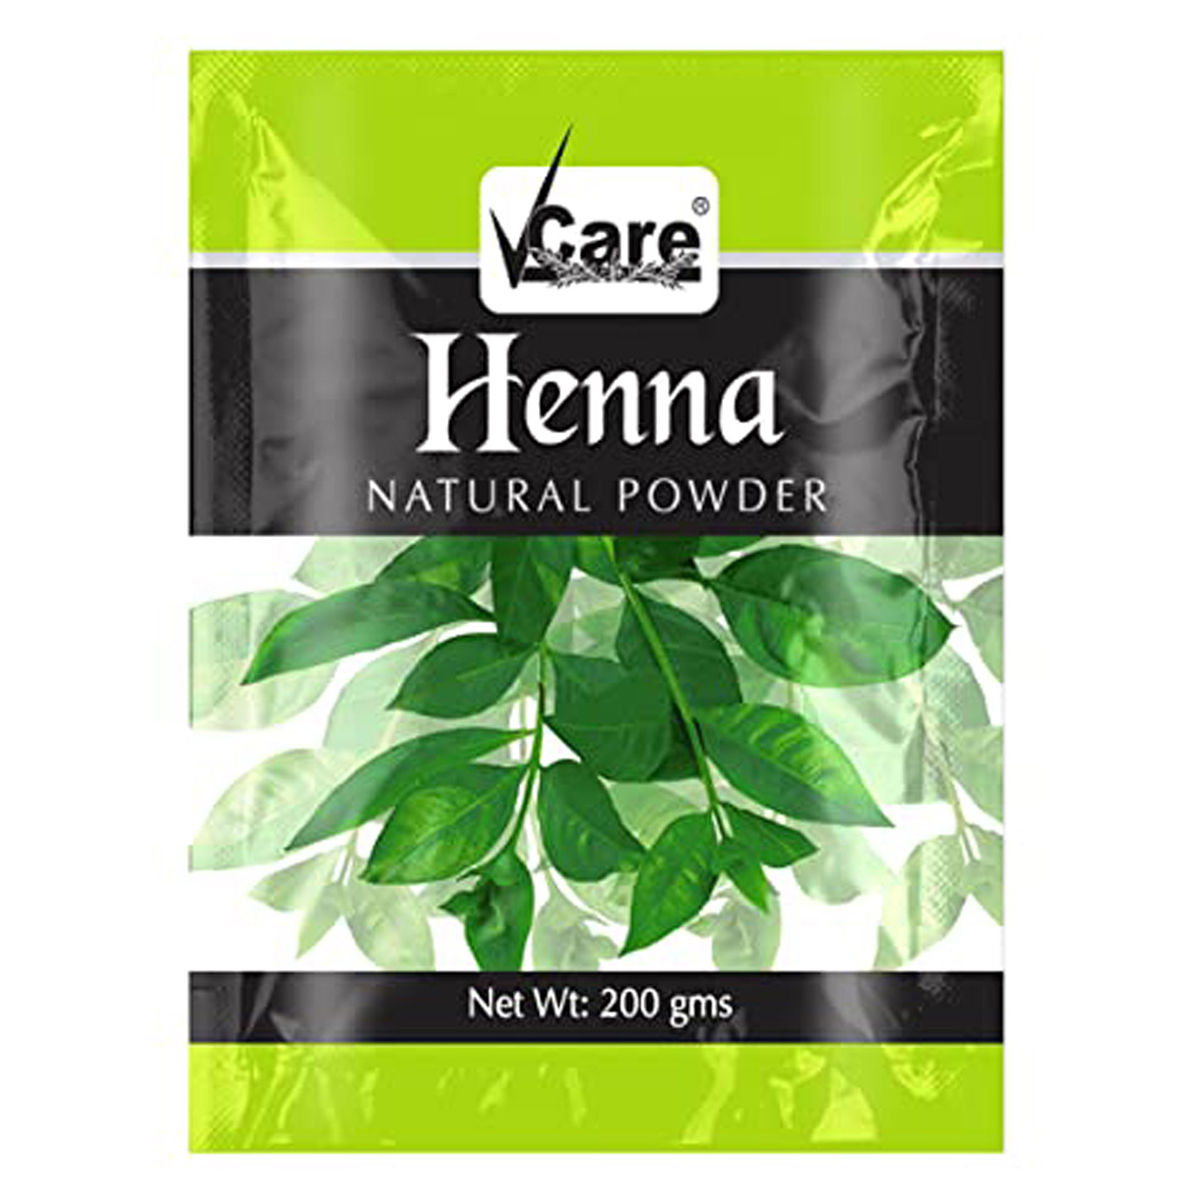 Buy Vcare Henna Natural Powder, 200 gm Online